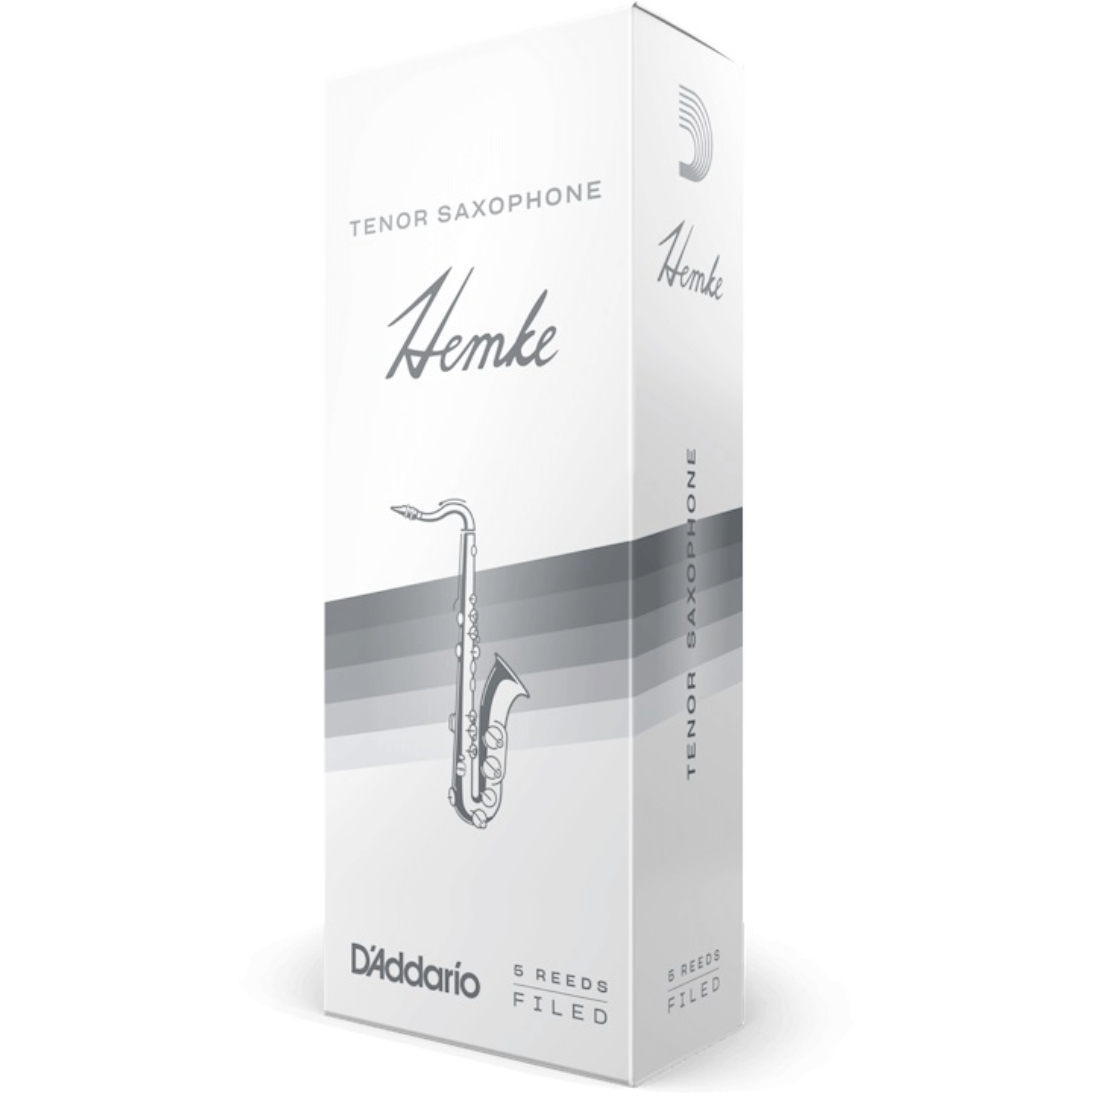 White and grey box of 5 Hemke tenor saxophone reeds - strength of 3.5